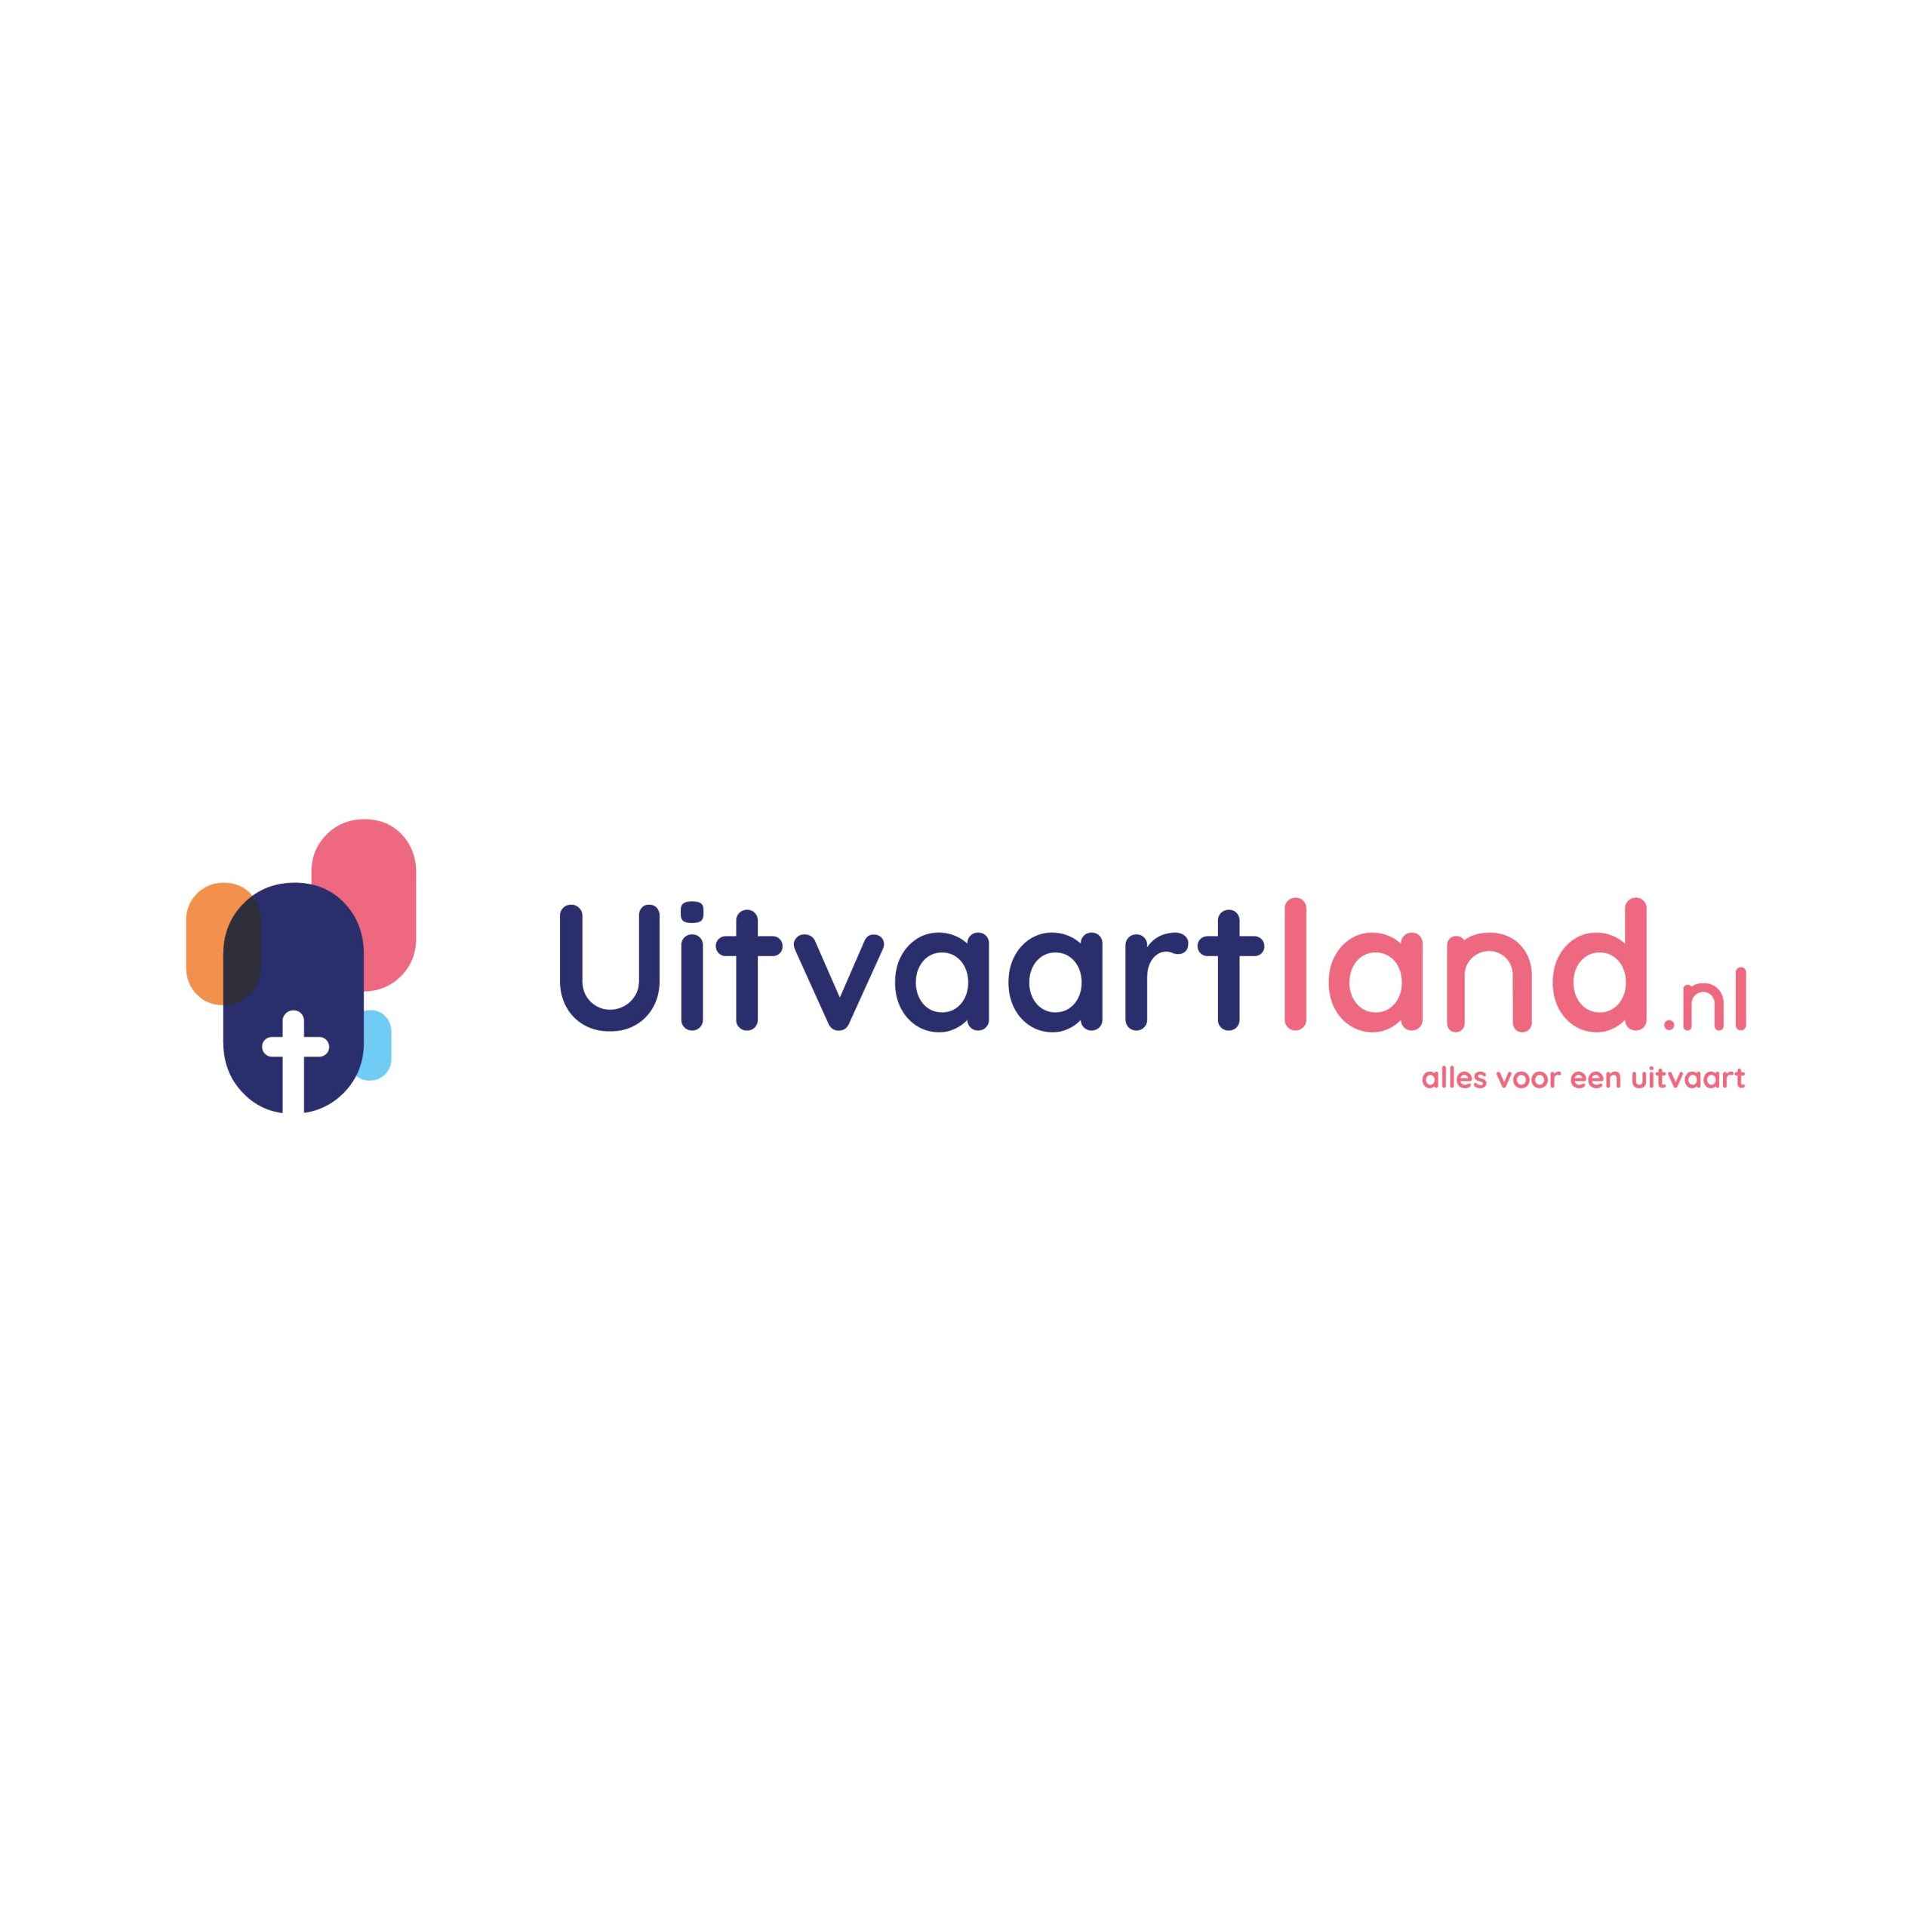 uitvaartland logo